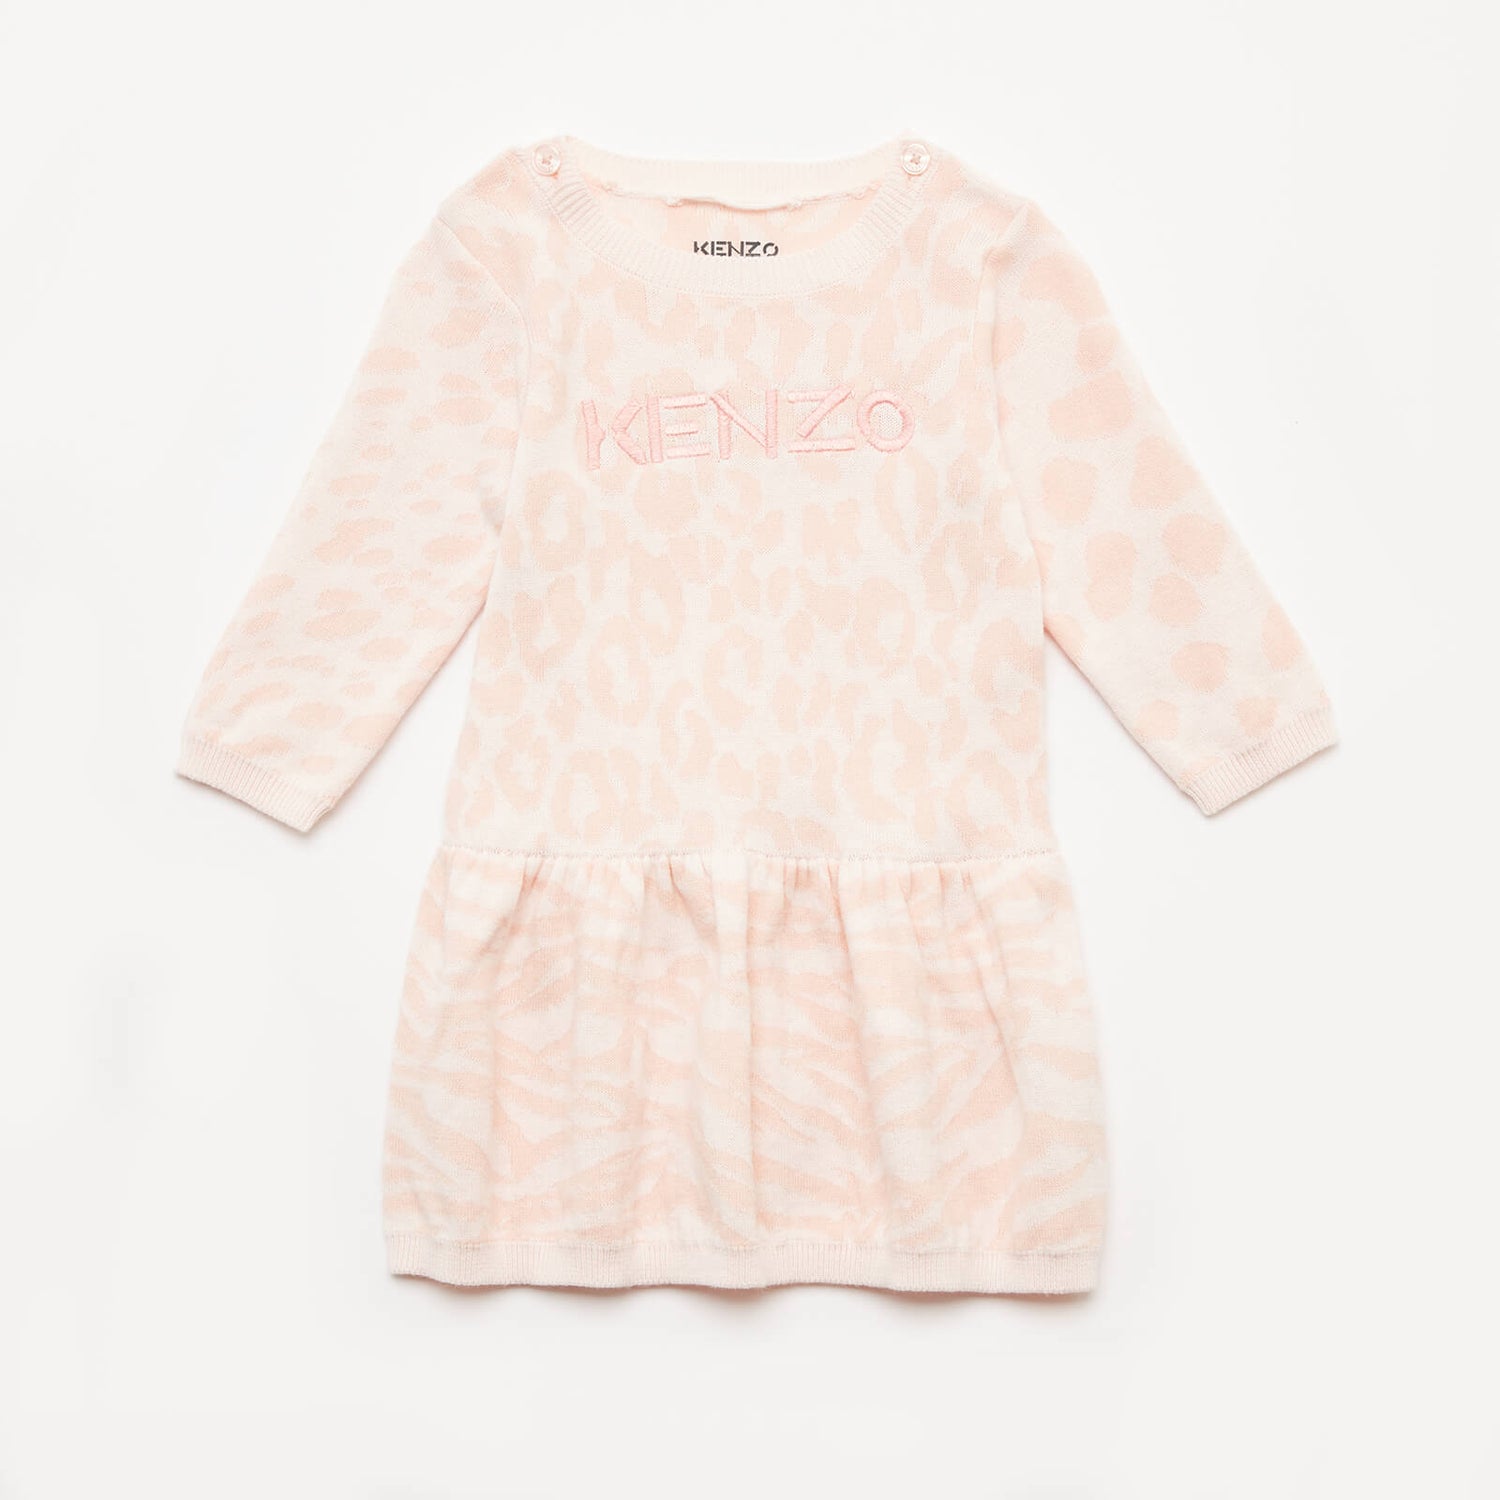 KENZO Newborn Animal Print Dress - Pale Pink